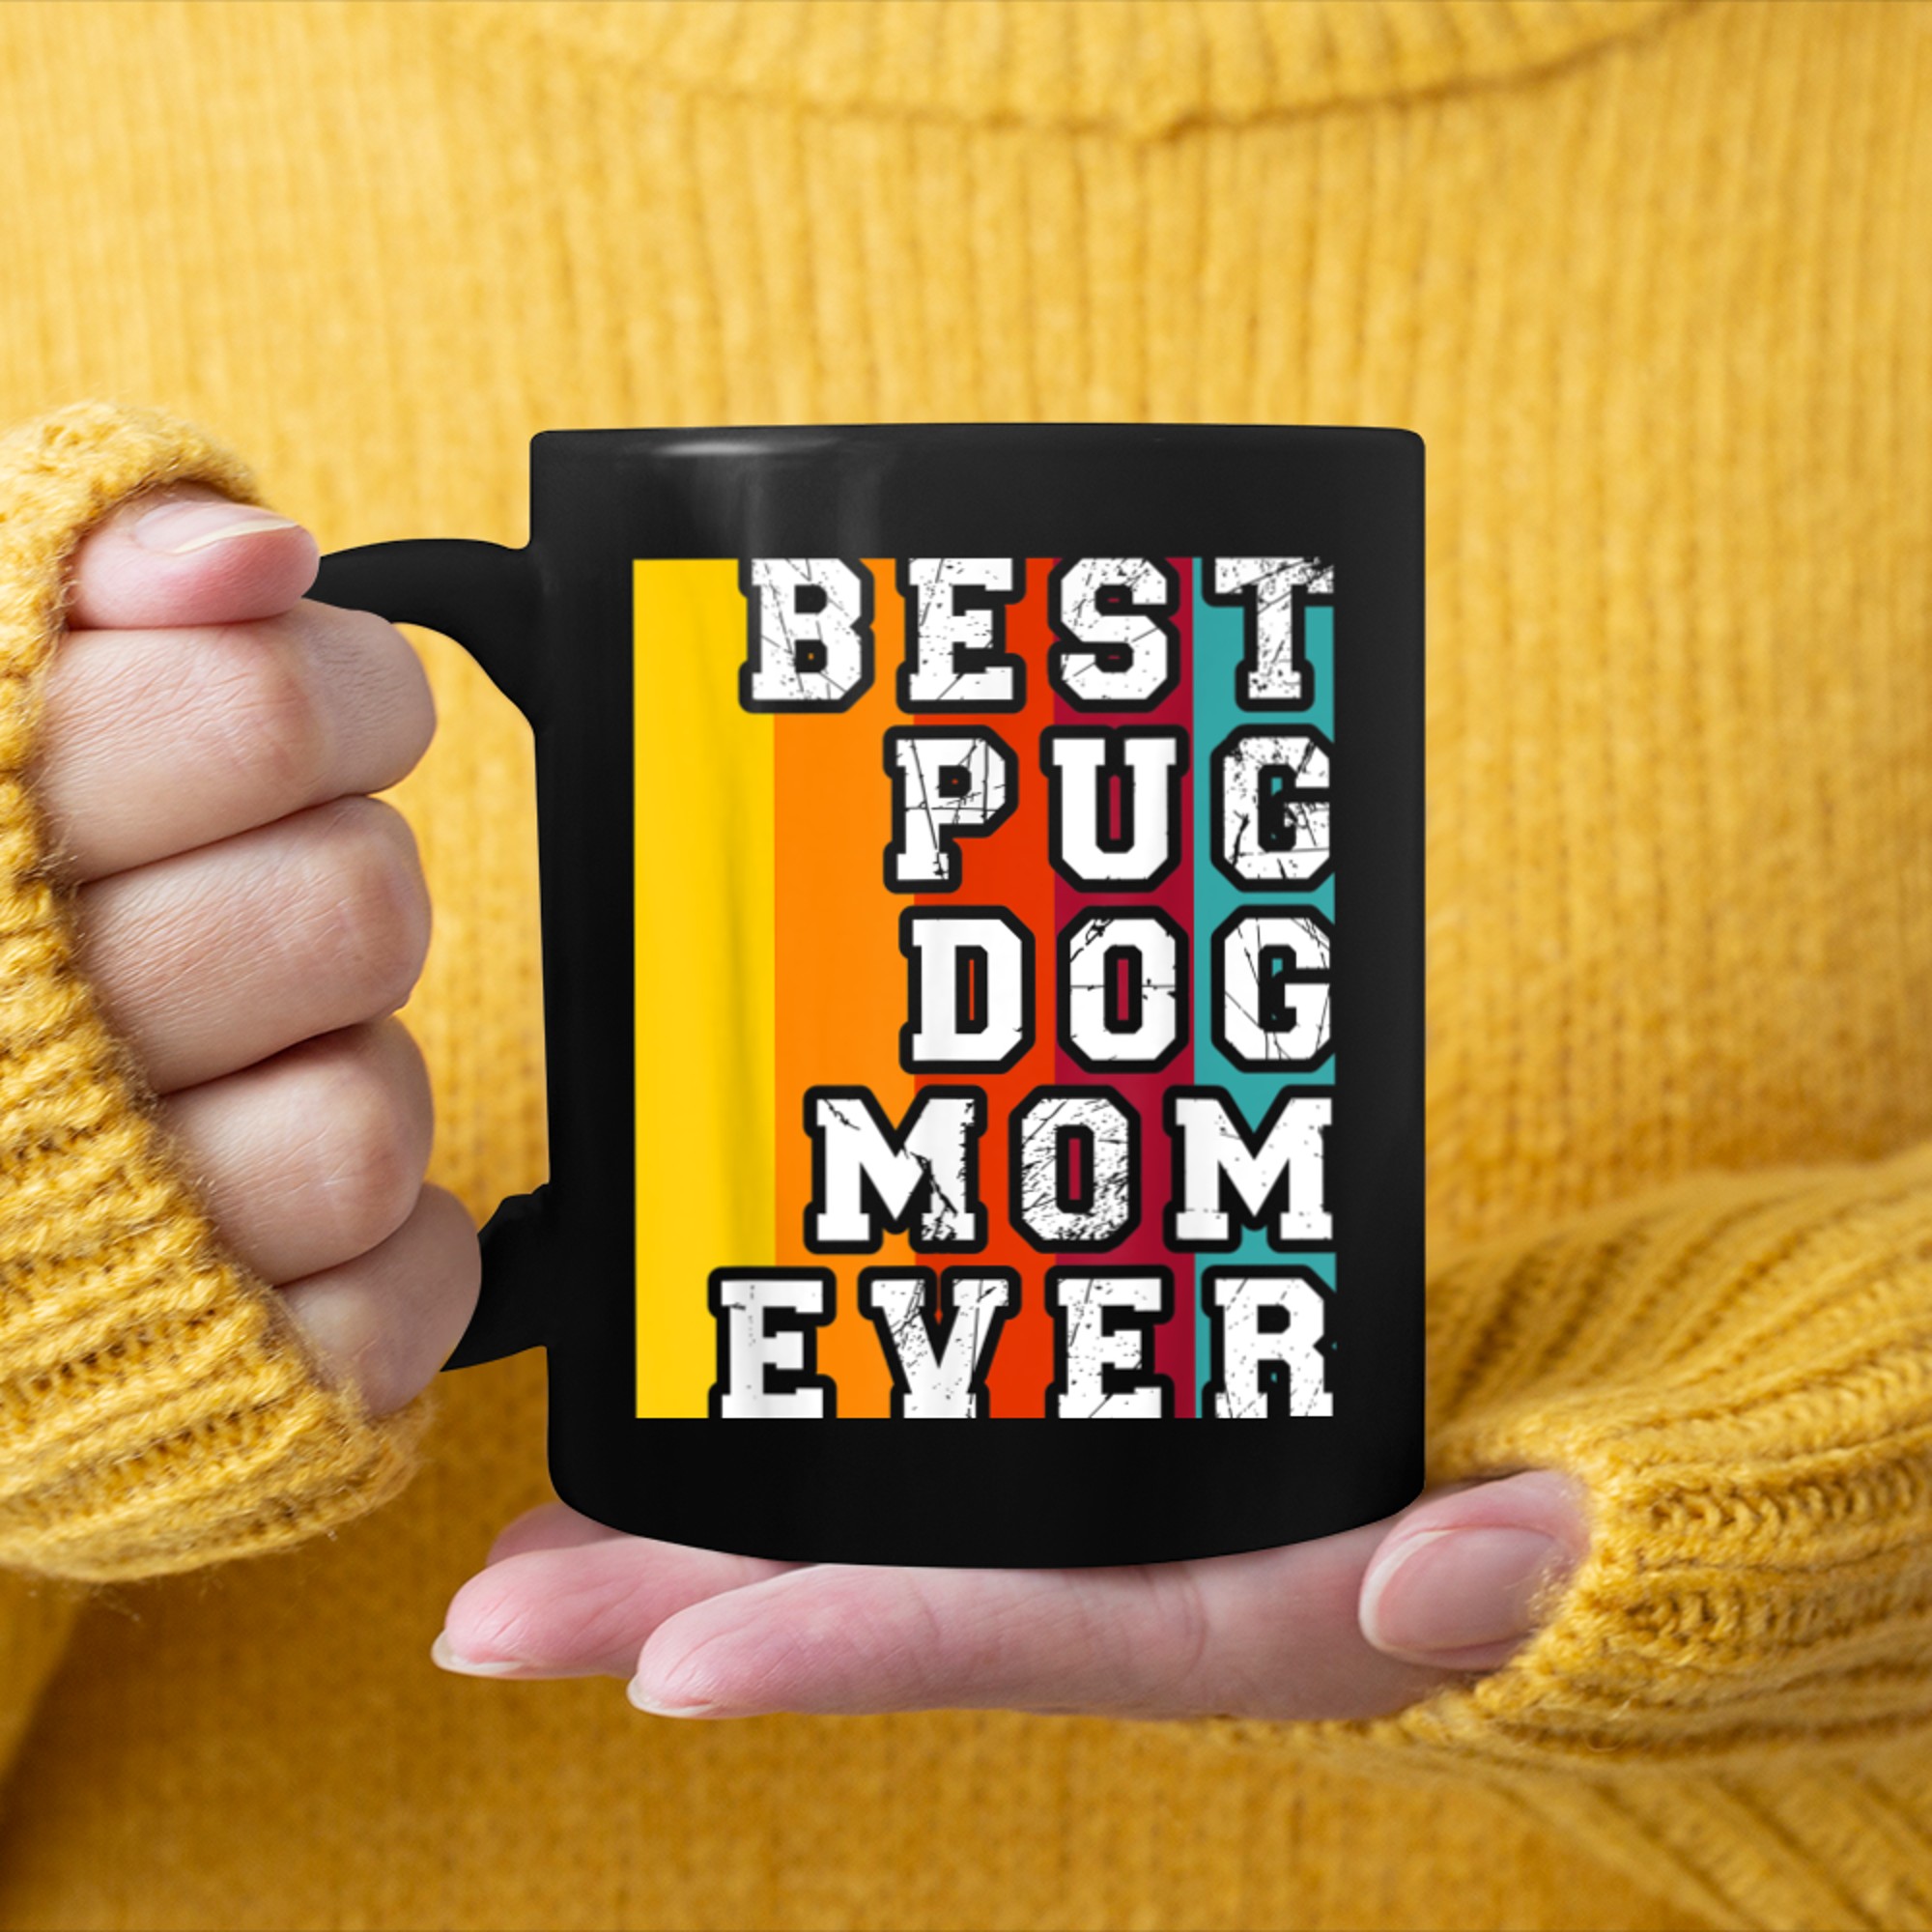 Best Pug DOG Mom Ever design mug black